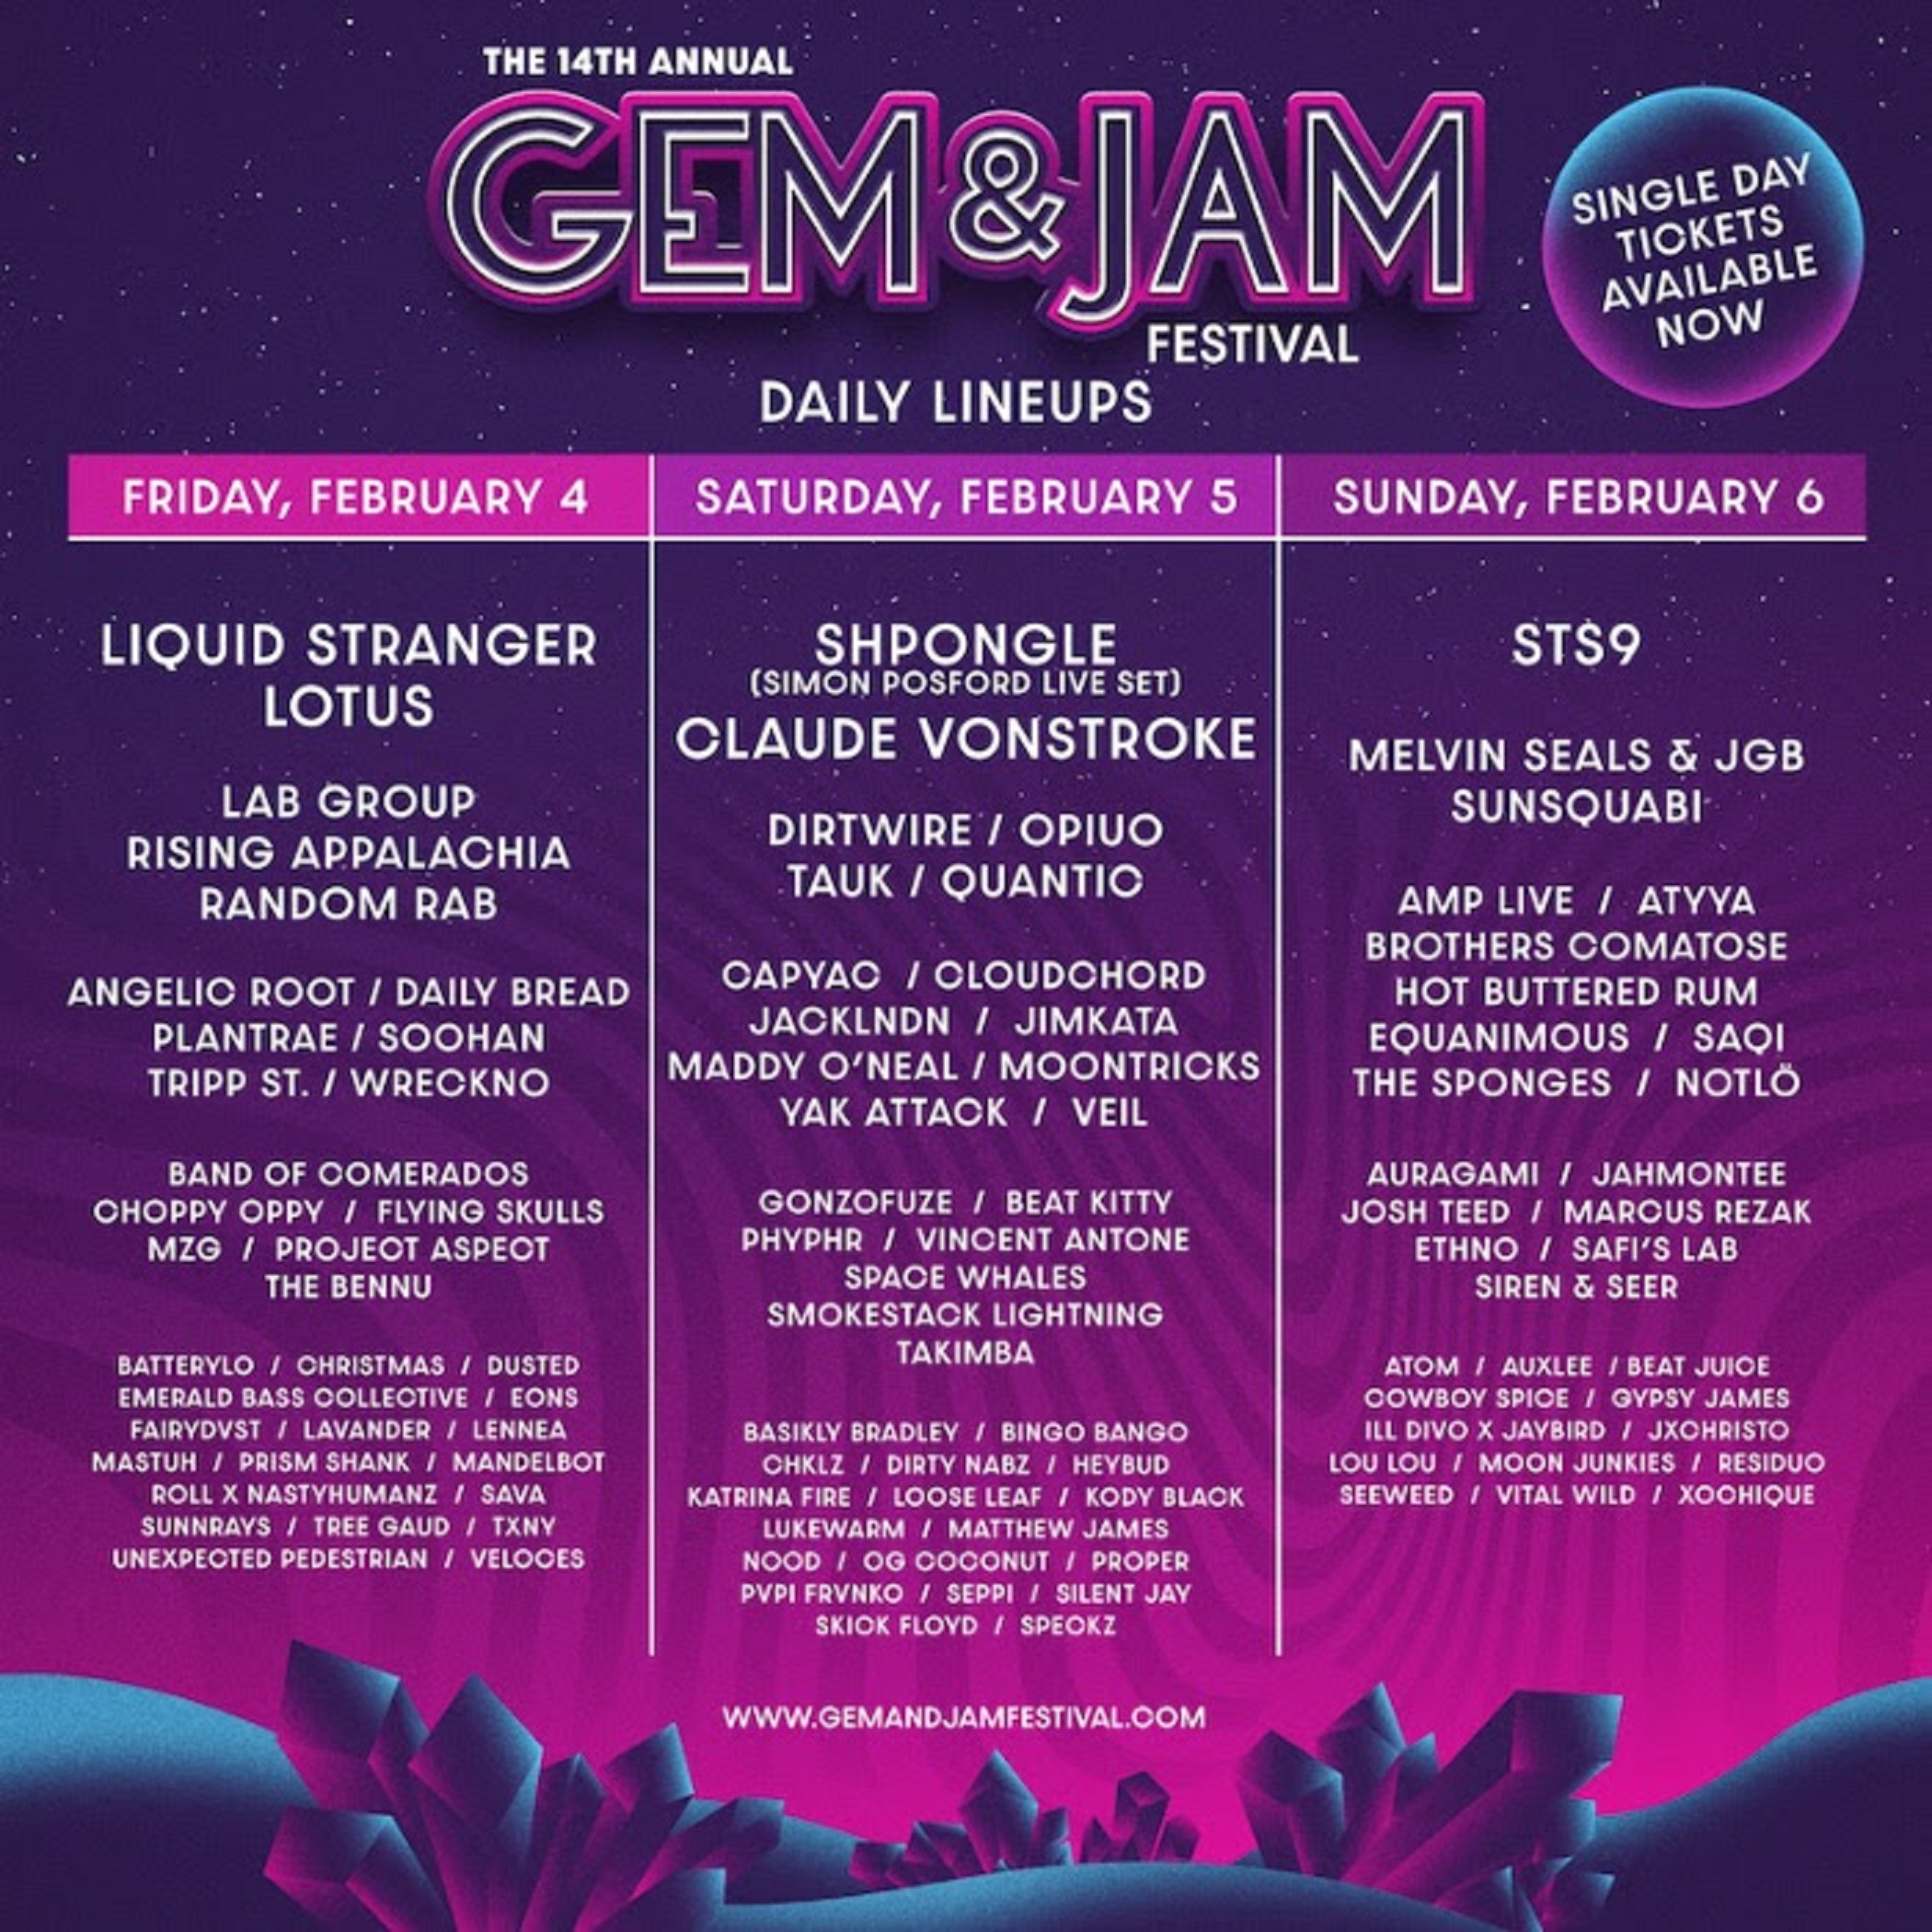 Gem & Jam Festival unveils lineup additions + art and wellness programming